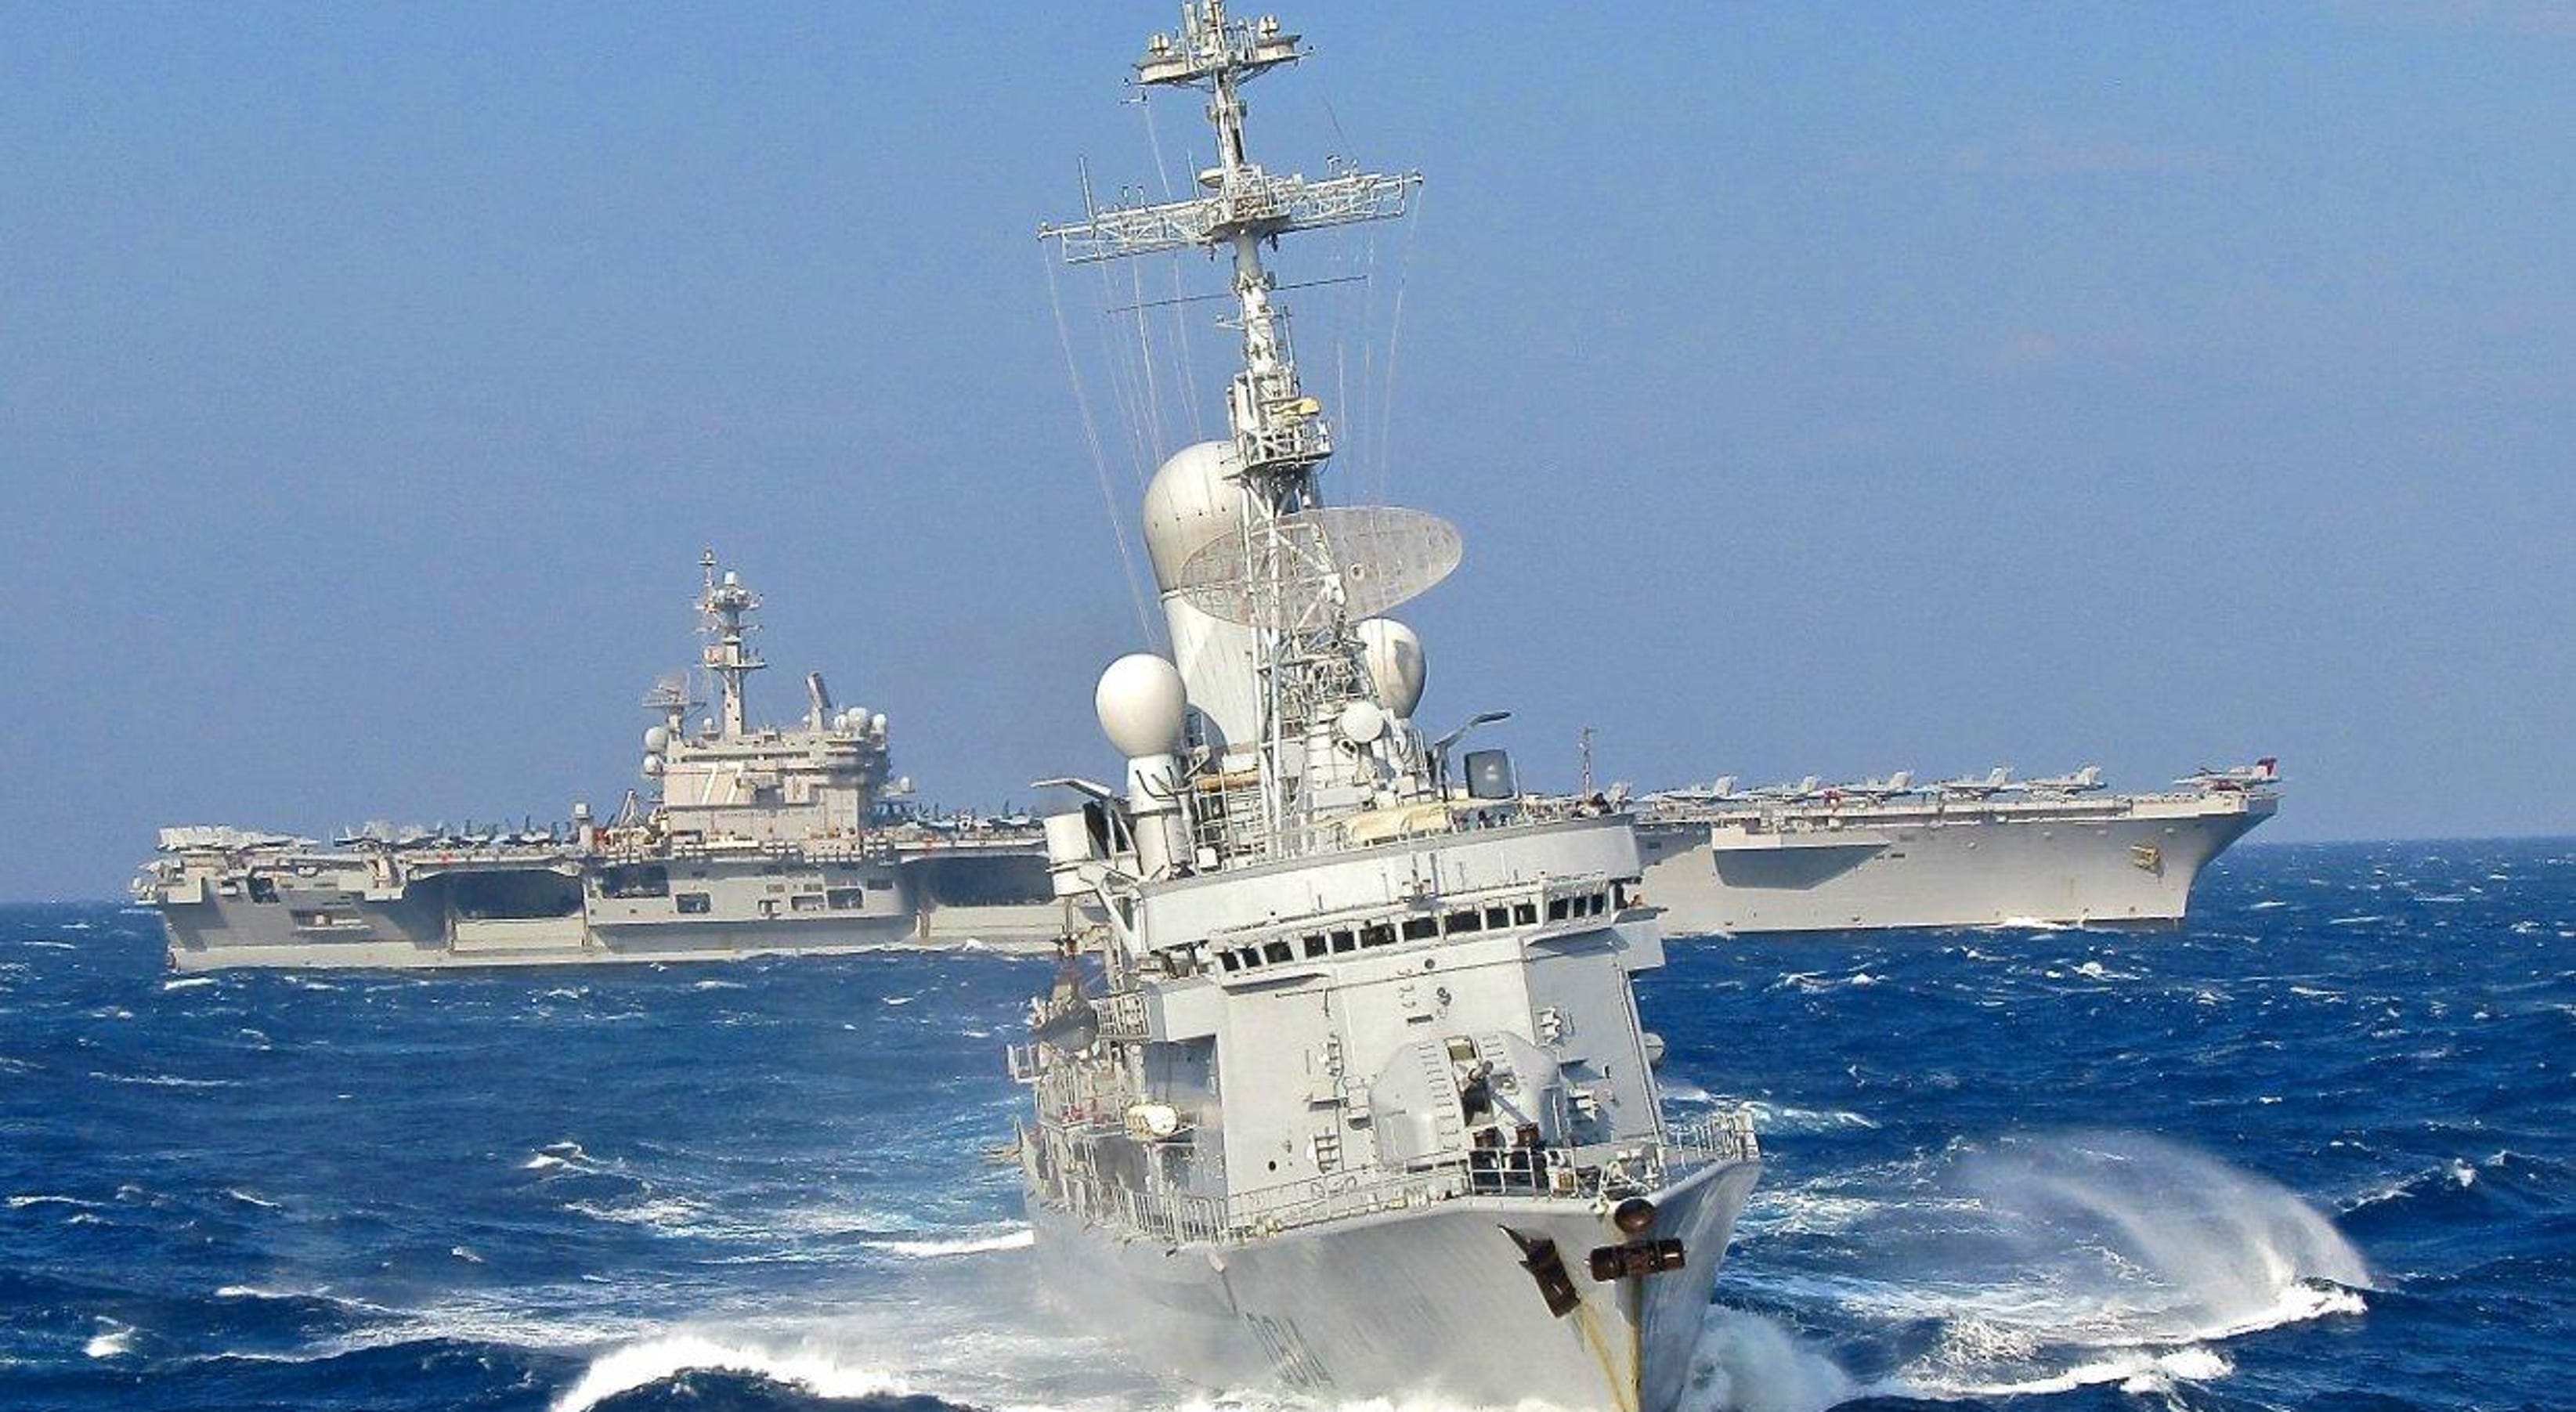 Navy SEALs seize oil tanker from Libyan rebels